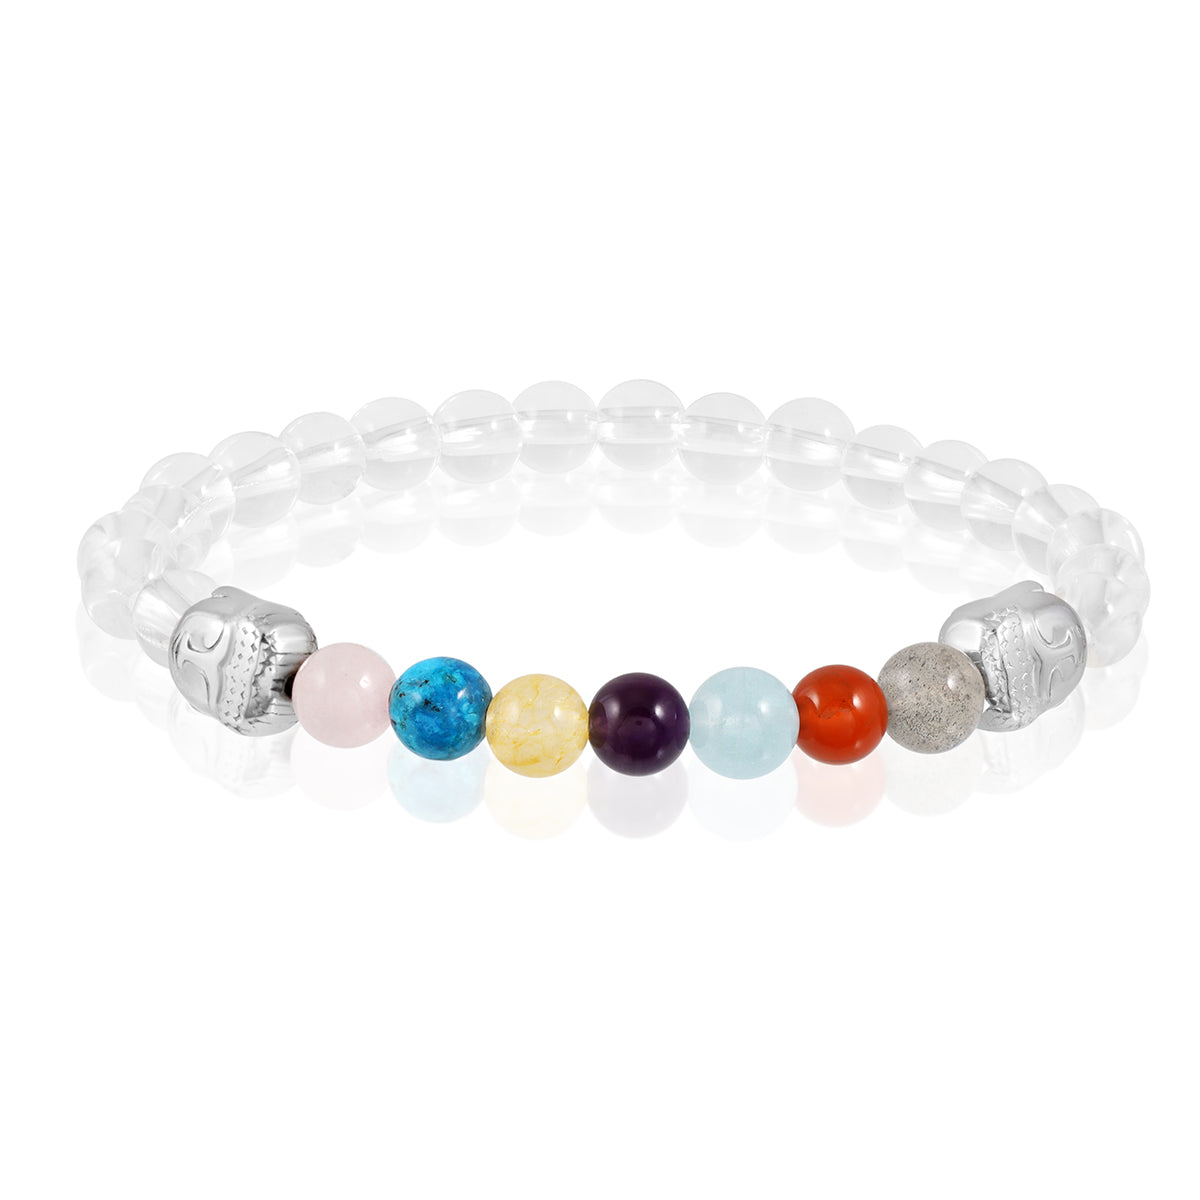 7 Chakra, Buddha and Crystal Quartz Beads Stretch Bracelet